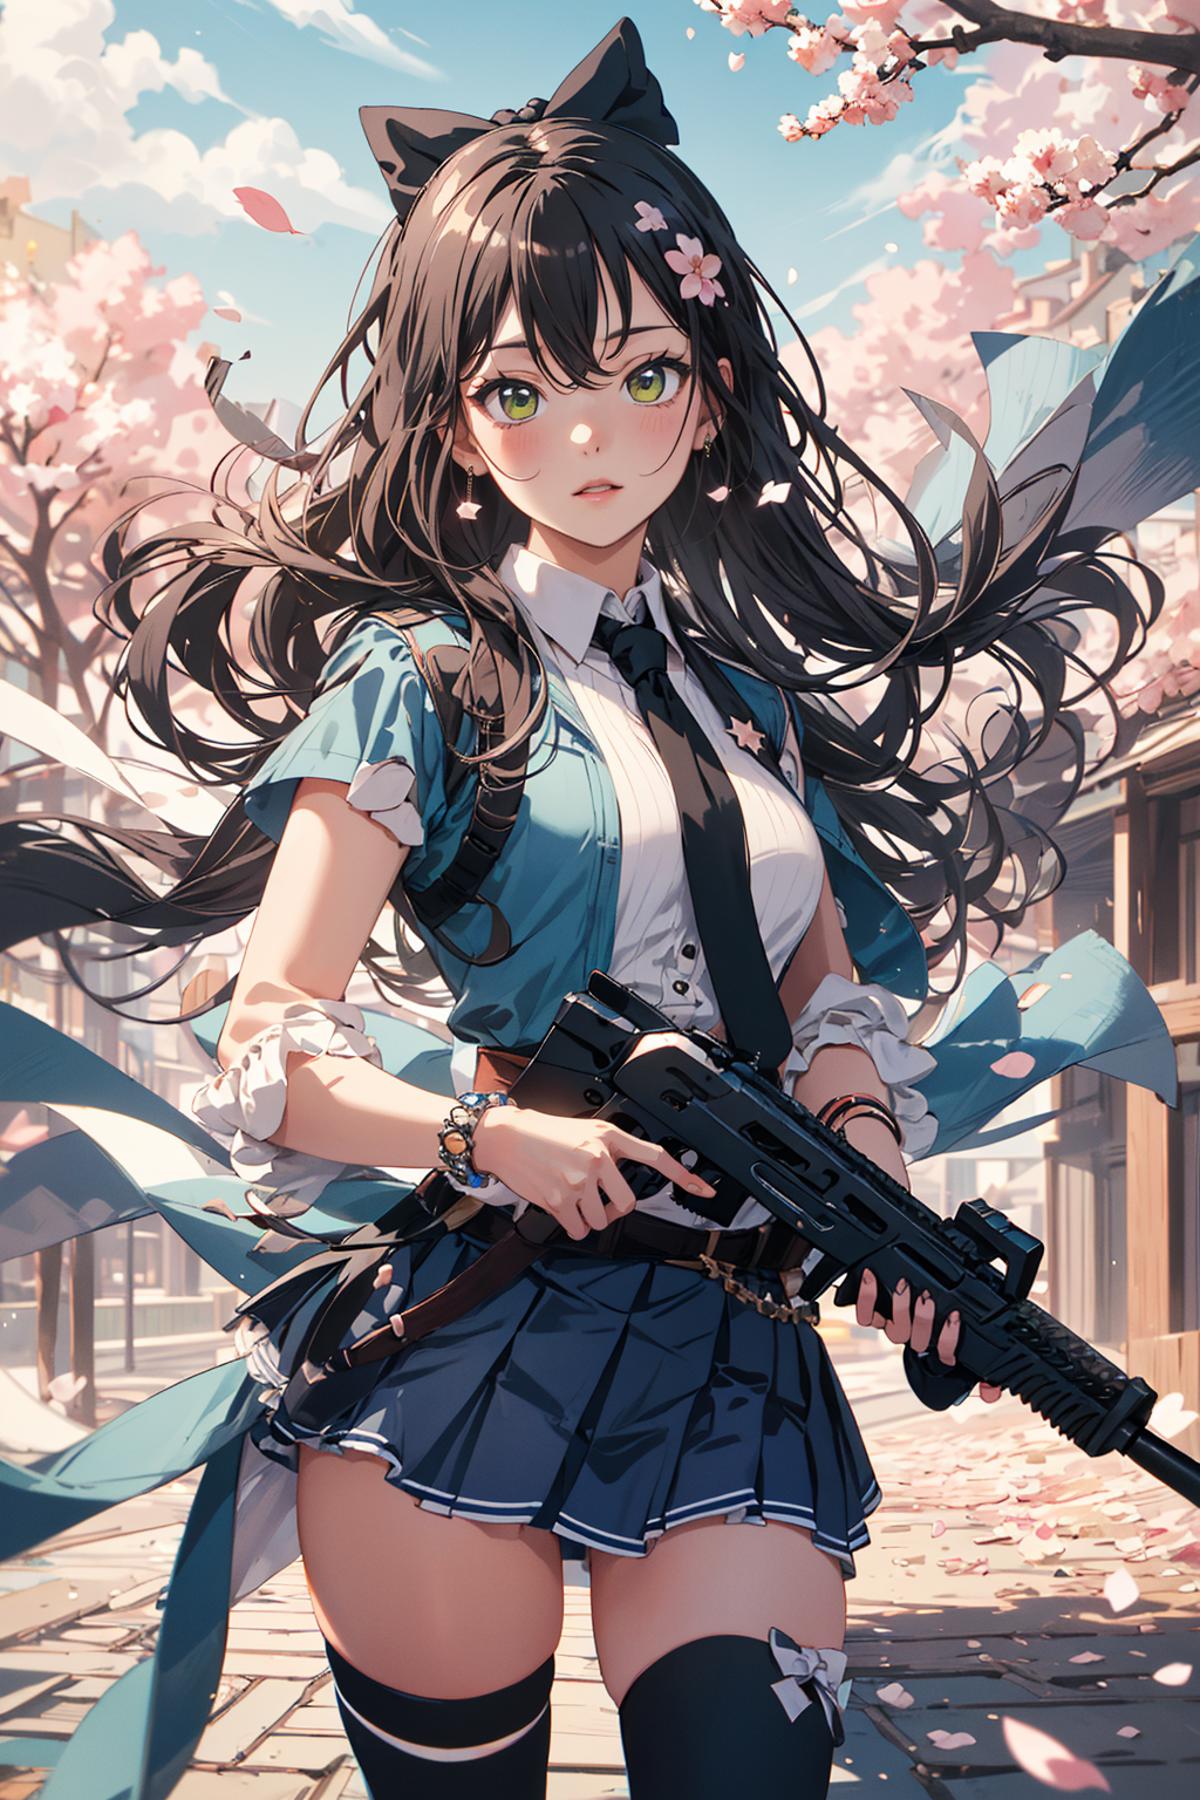 [OpenPose + Lineart] Holding gun image by Tokugawa